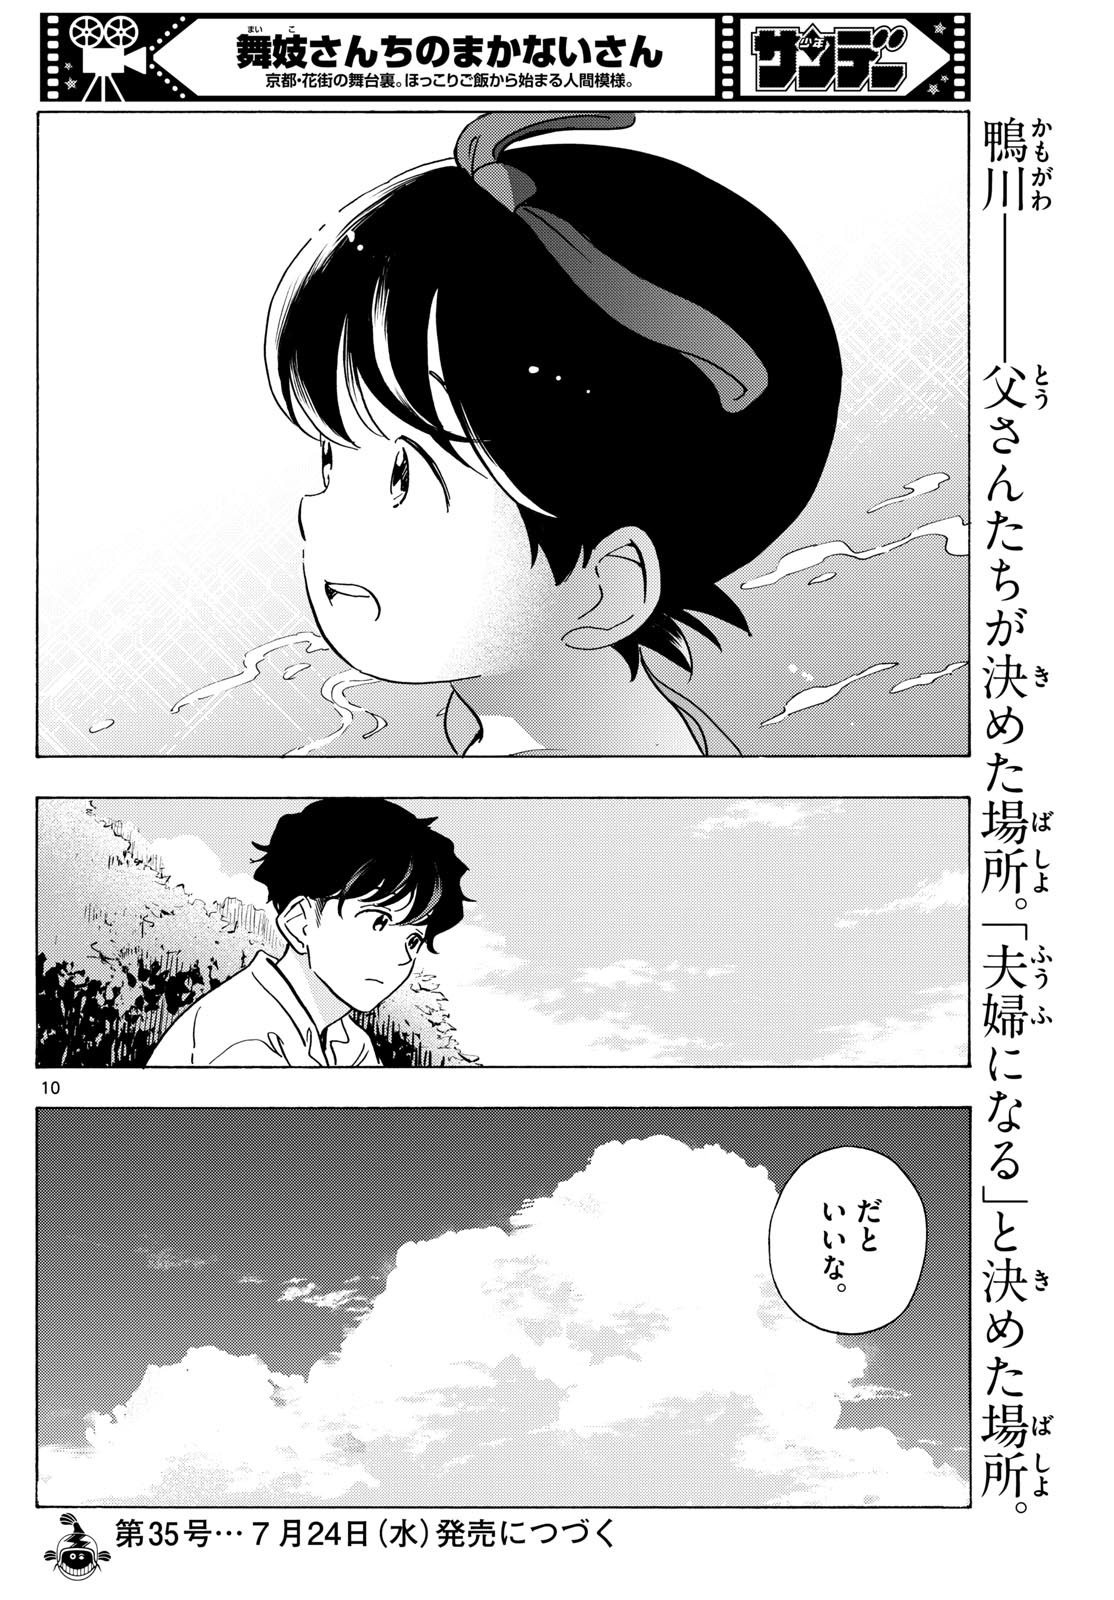 Maiko-san Chi no Makanai-san - Chapter 307 - Page 10